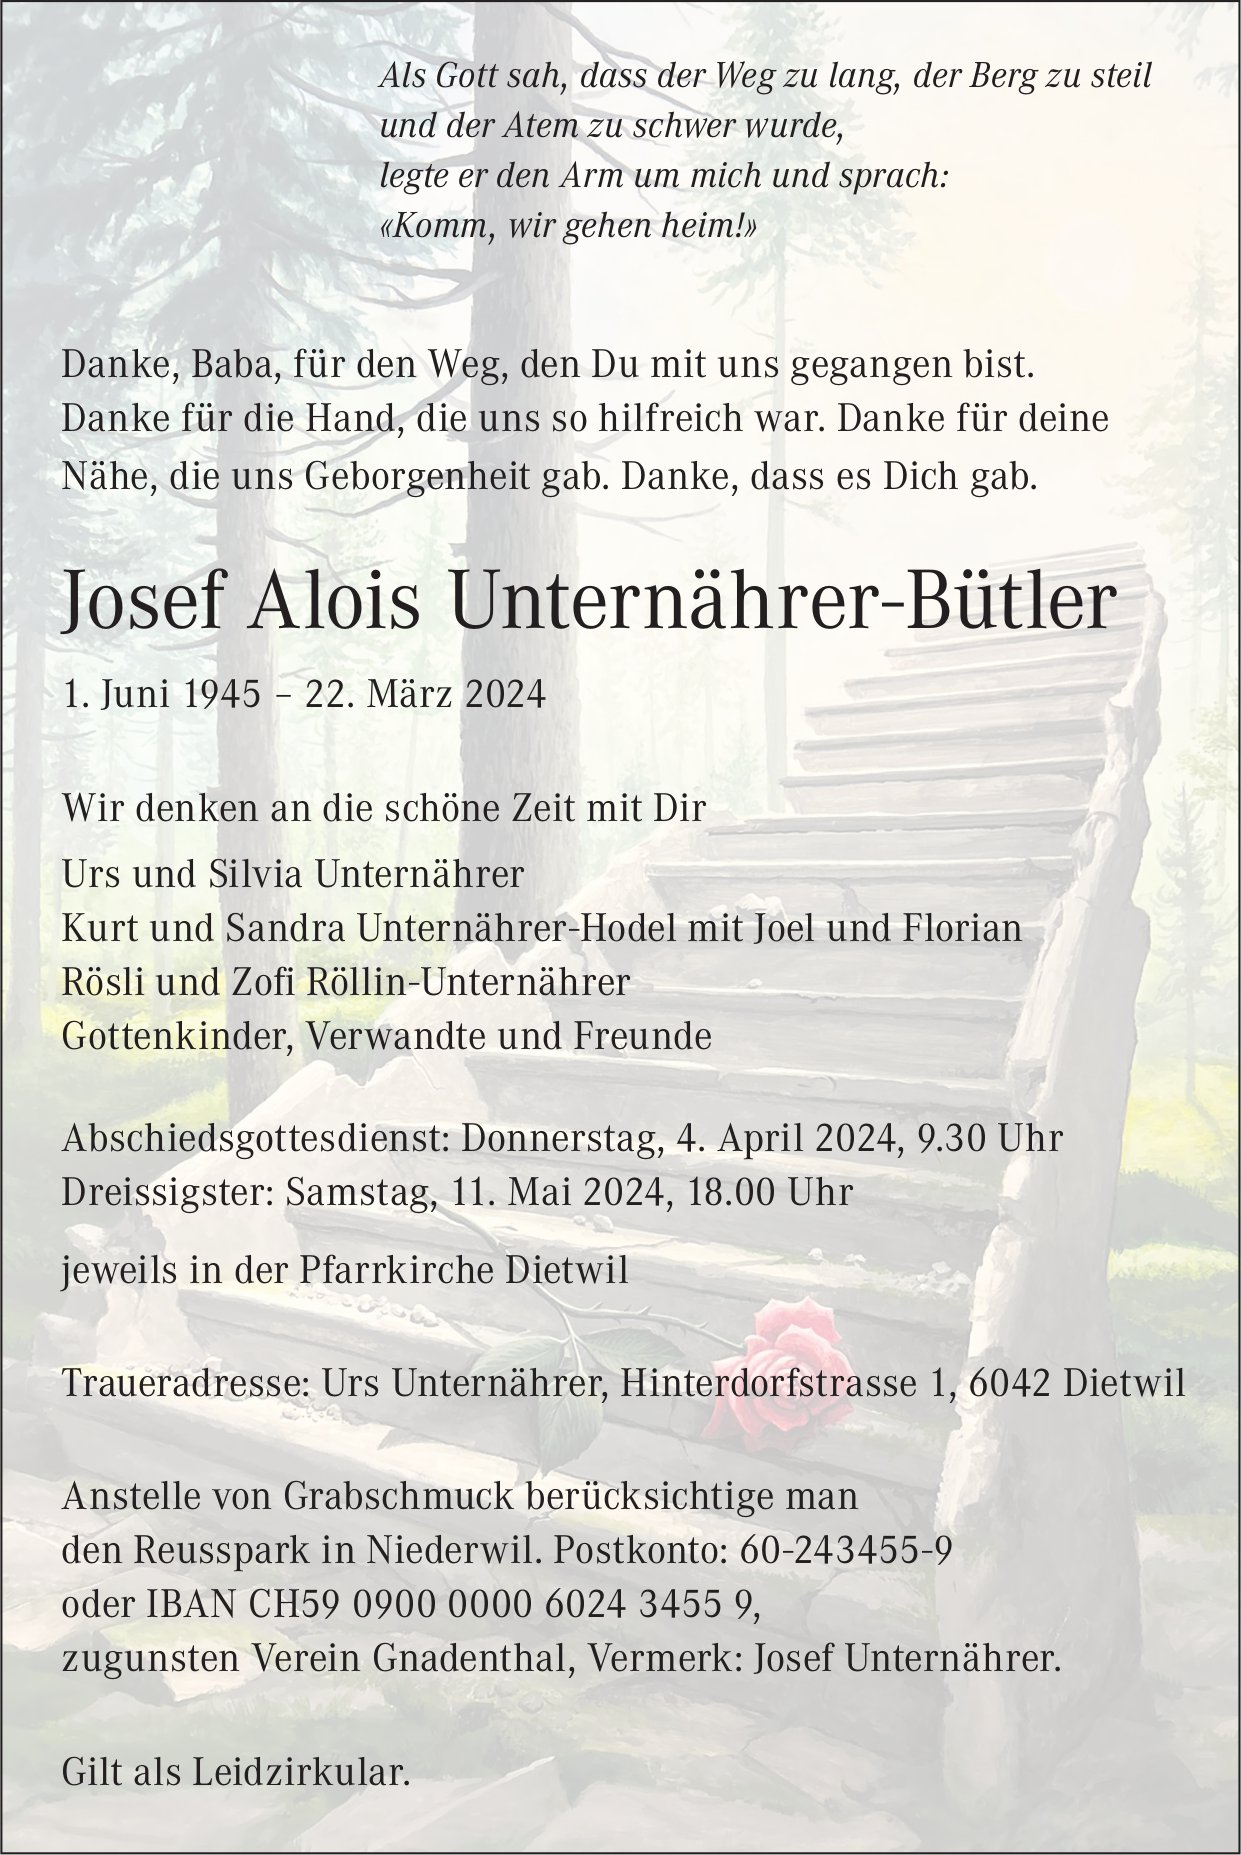 Unternährer-Bütler Josef Alois, März 2024 / TA